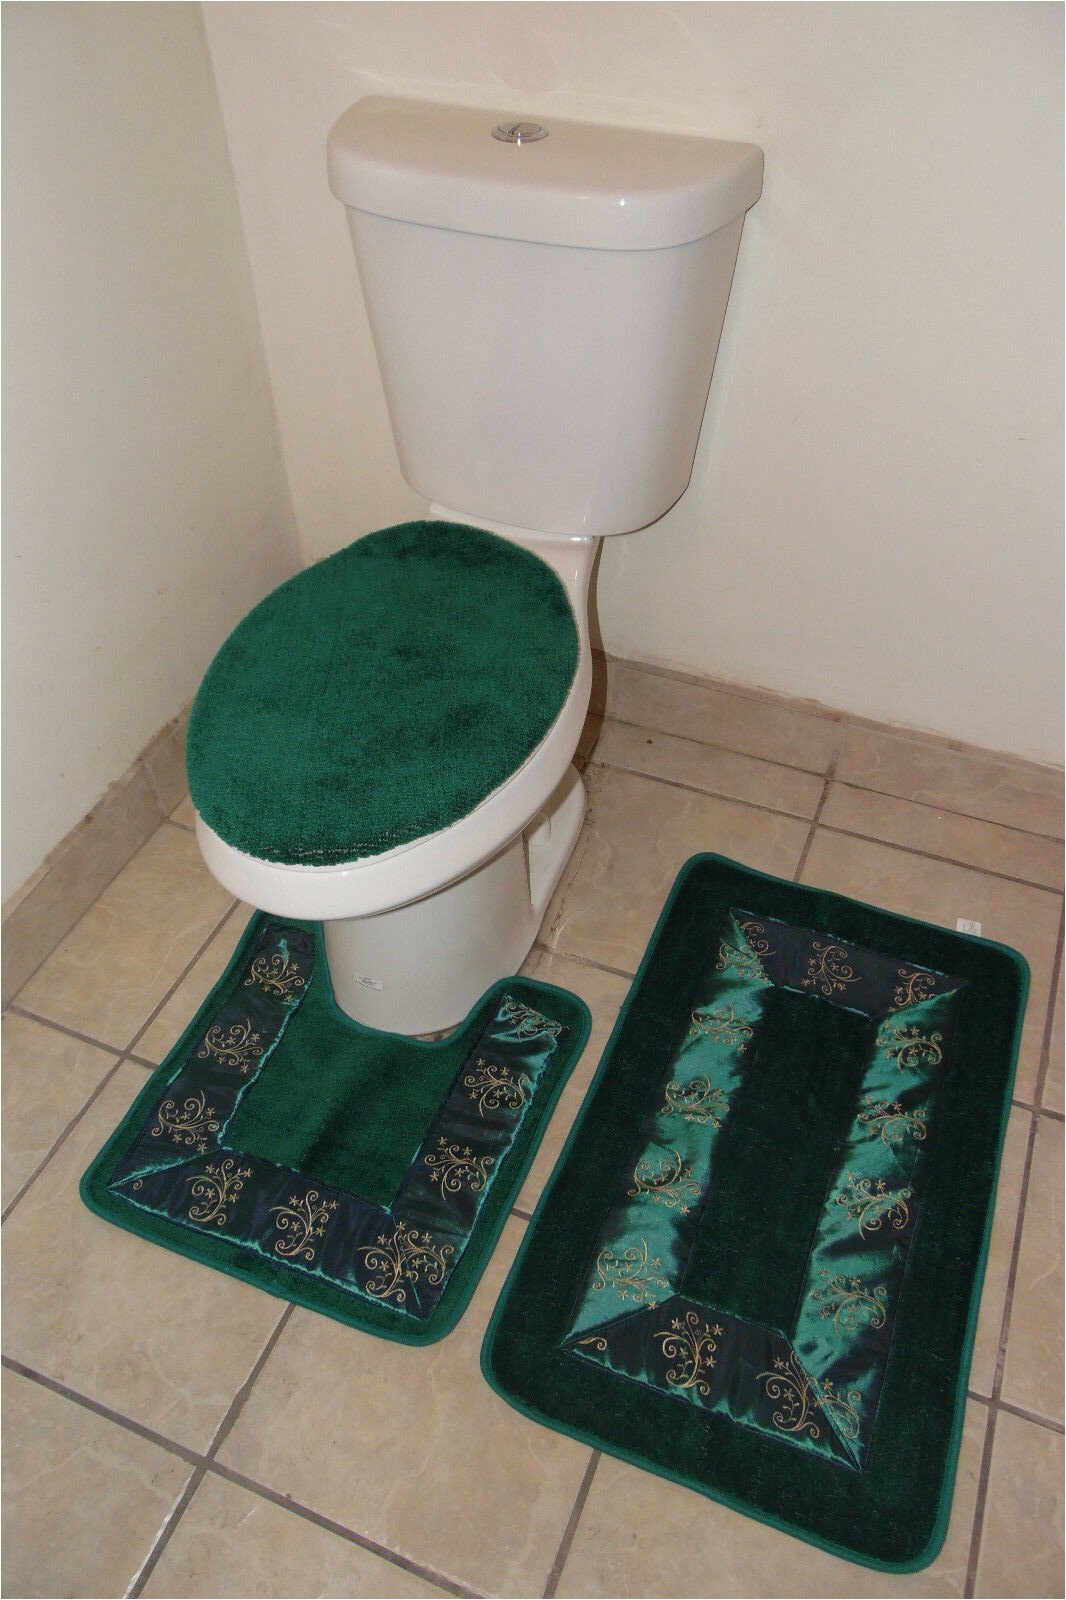 Lime Green Contour Bath Rug 3pc Bathroom Set Rug Contour Mat toilet Lid Cover In Home